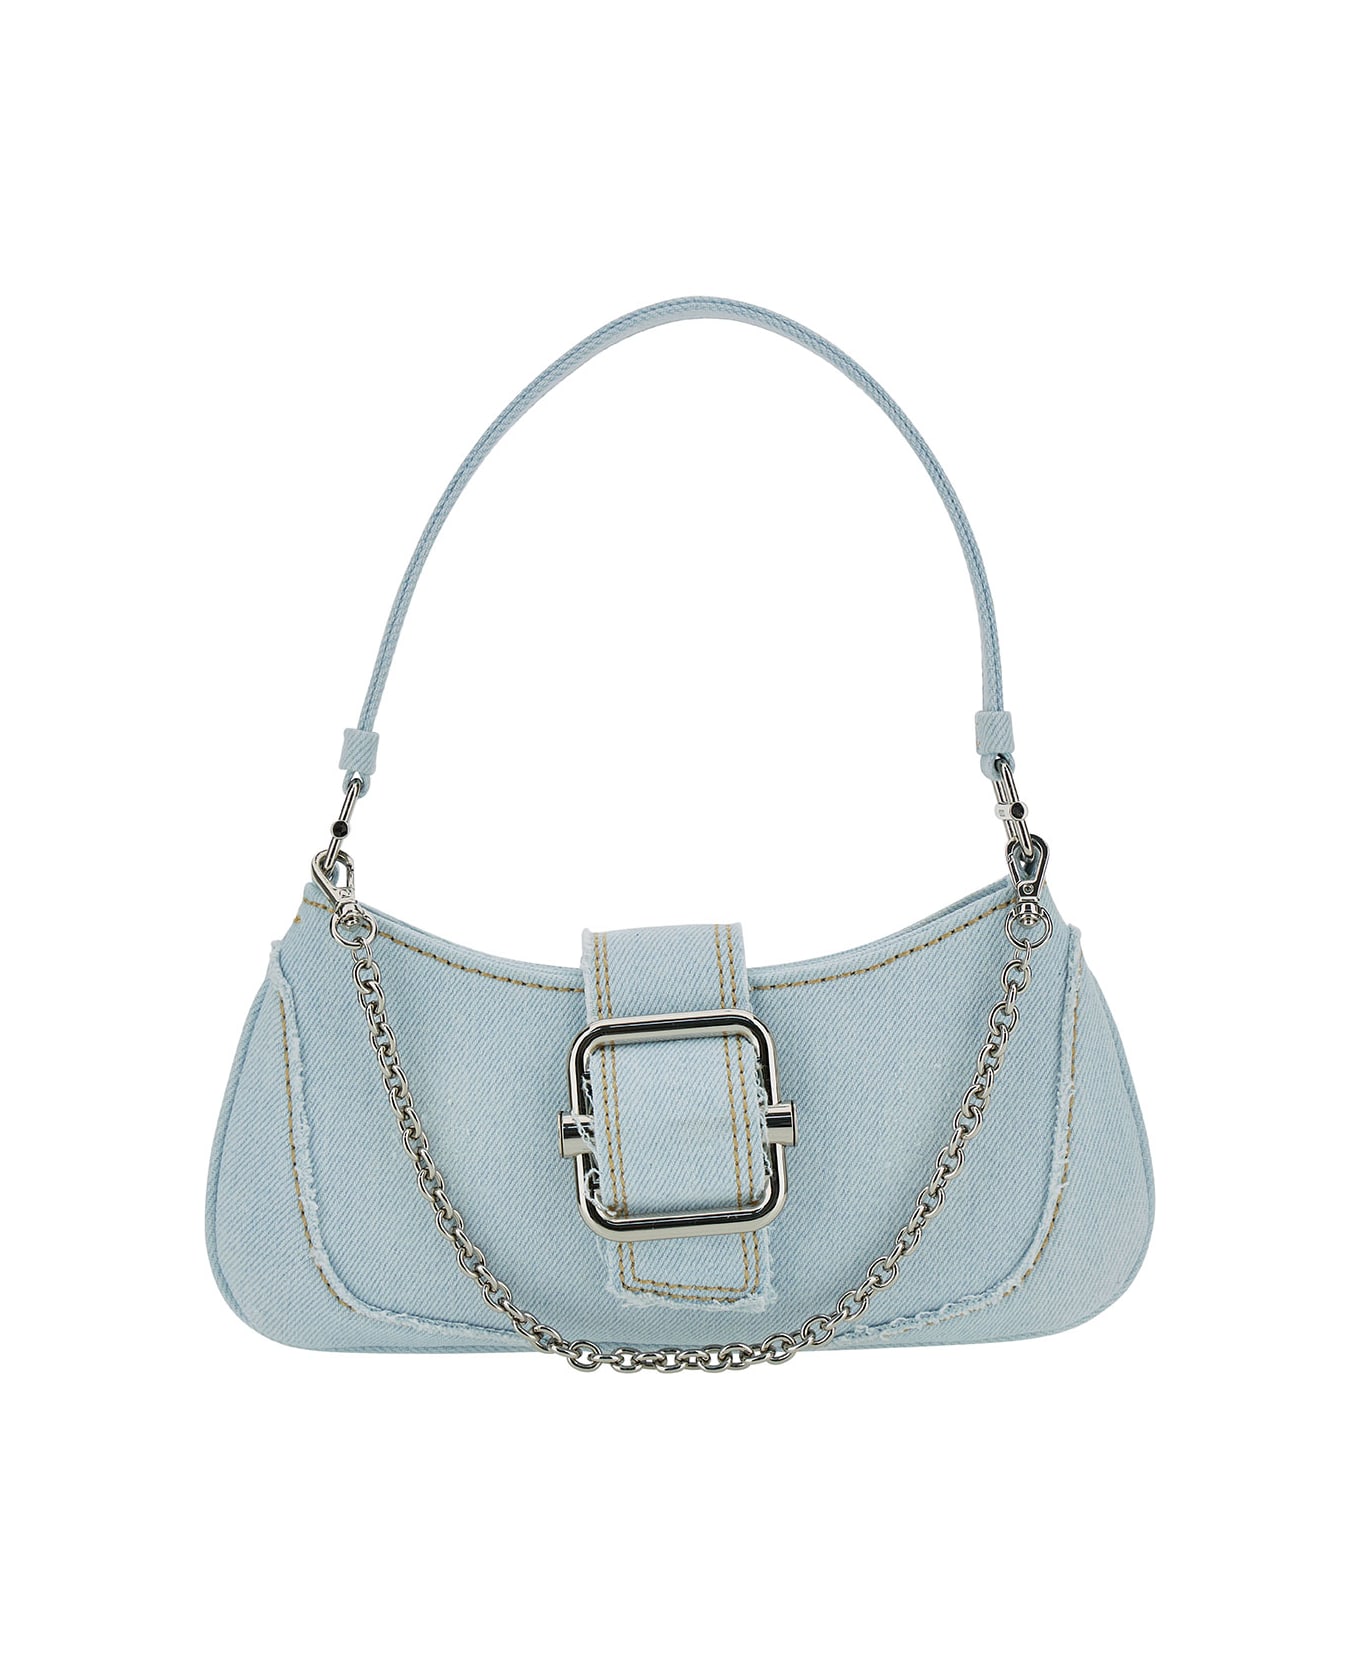 OSOI 'small Brocle' Light Blue Shoulder Bag In Cotton Denim Woman - Light blue